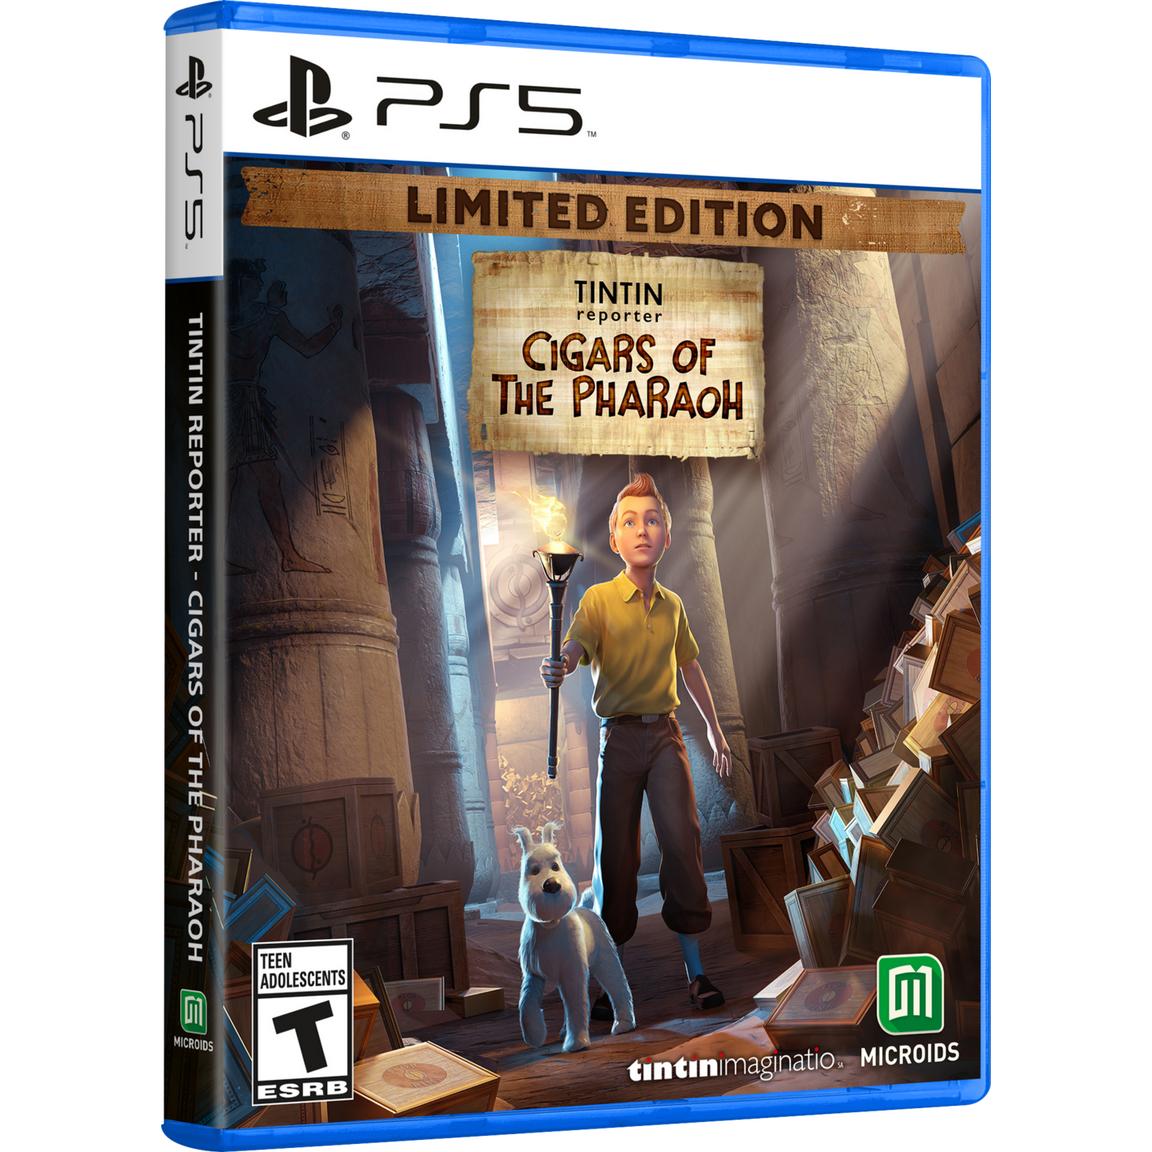 Видеоигра Tintin Reporter: Cigars of the Pharaoh Limited Edition - PlayStation 5 игра для ps5 tintin reporter cigars of the pharaoh лимитированное издание